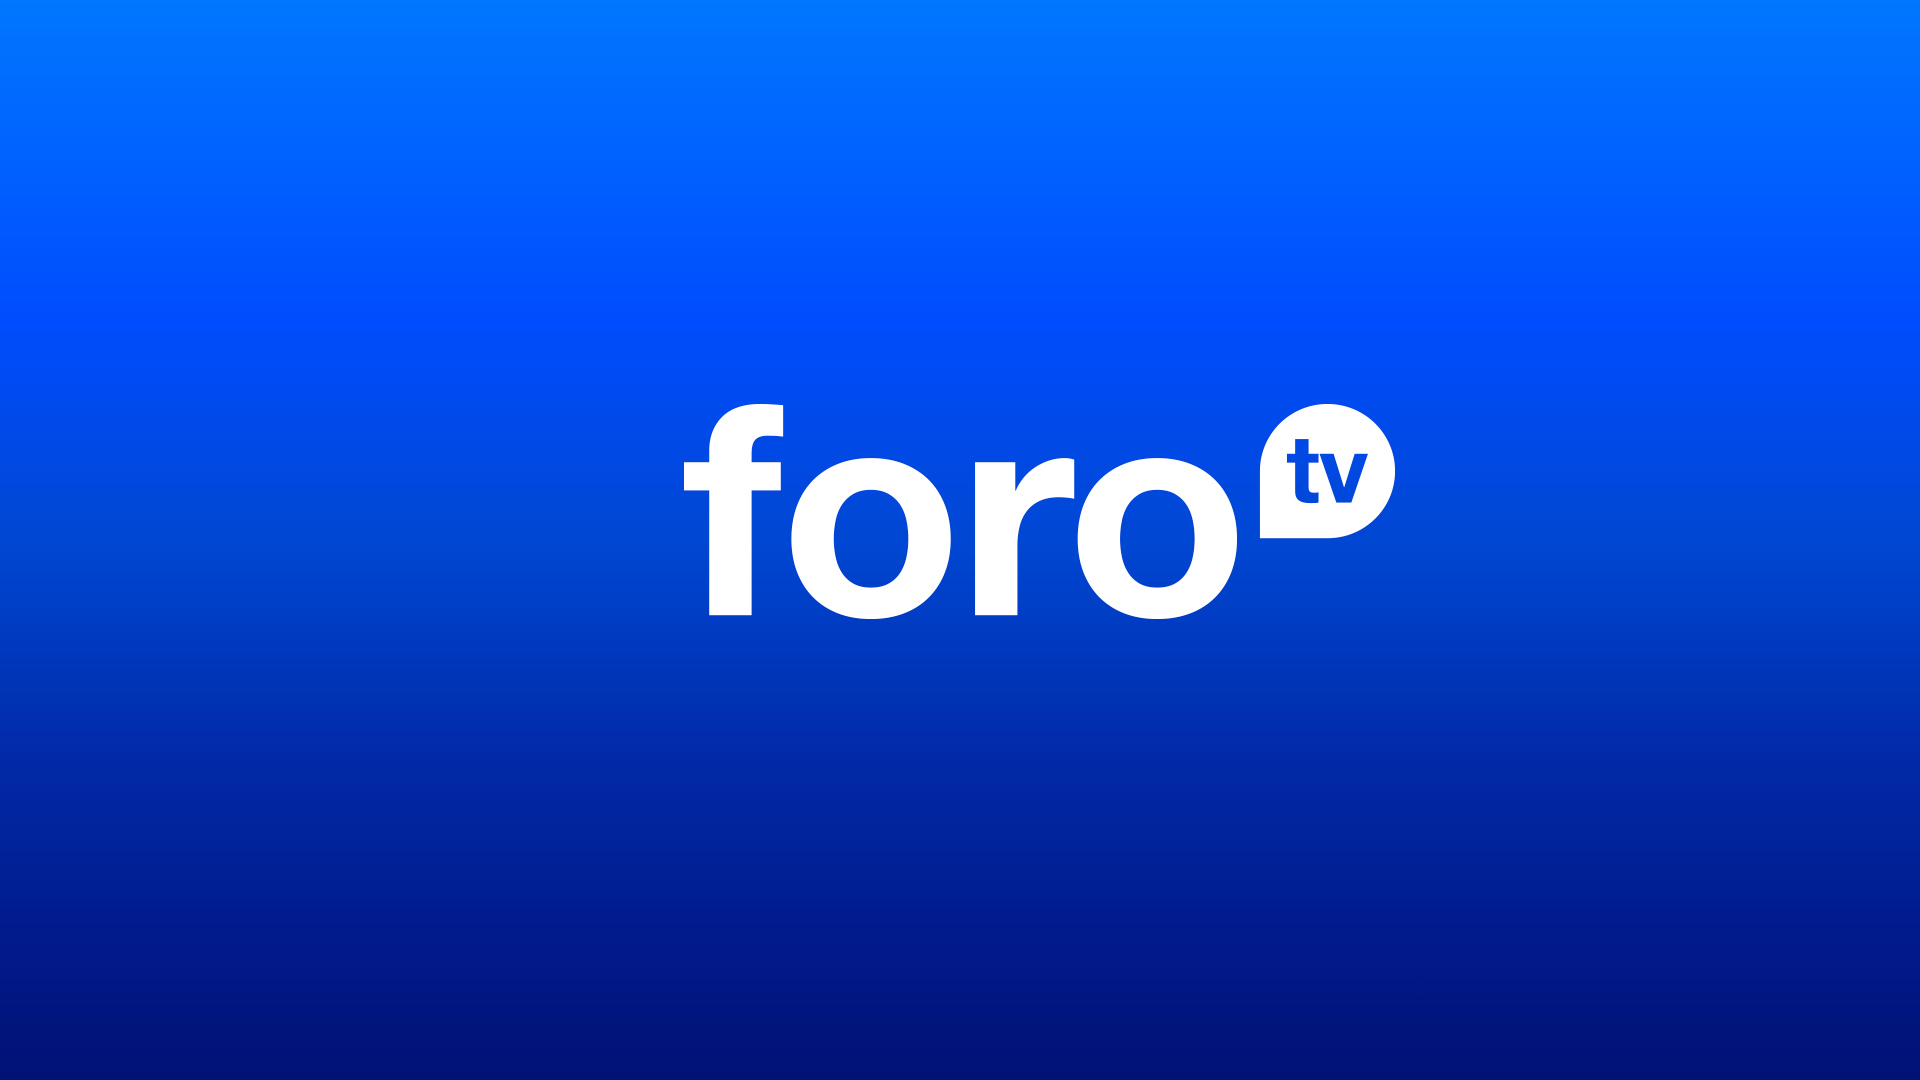 foro tv Branding 2018 — Carlos Moreno.Studio®